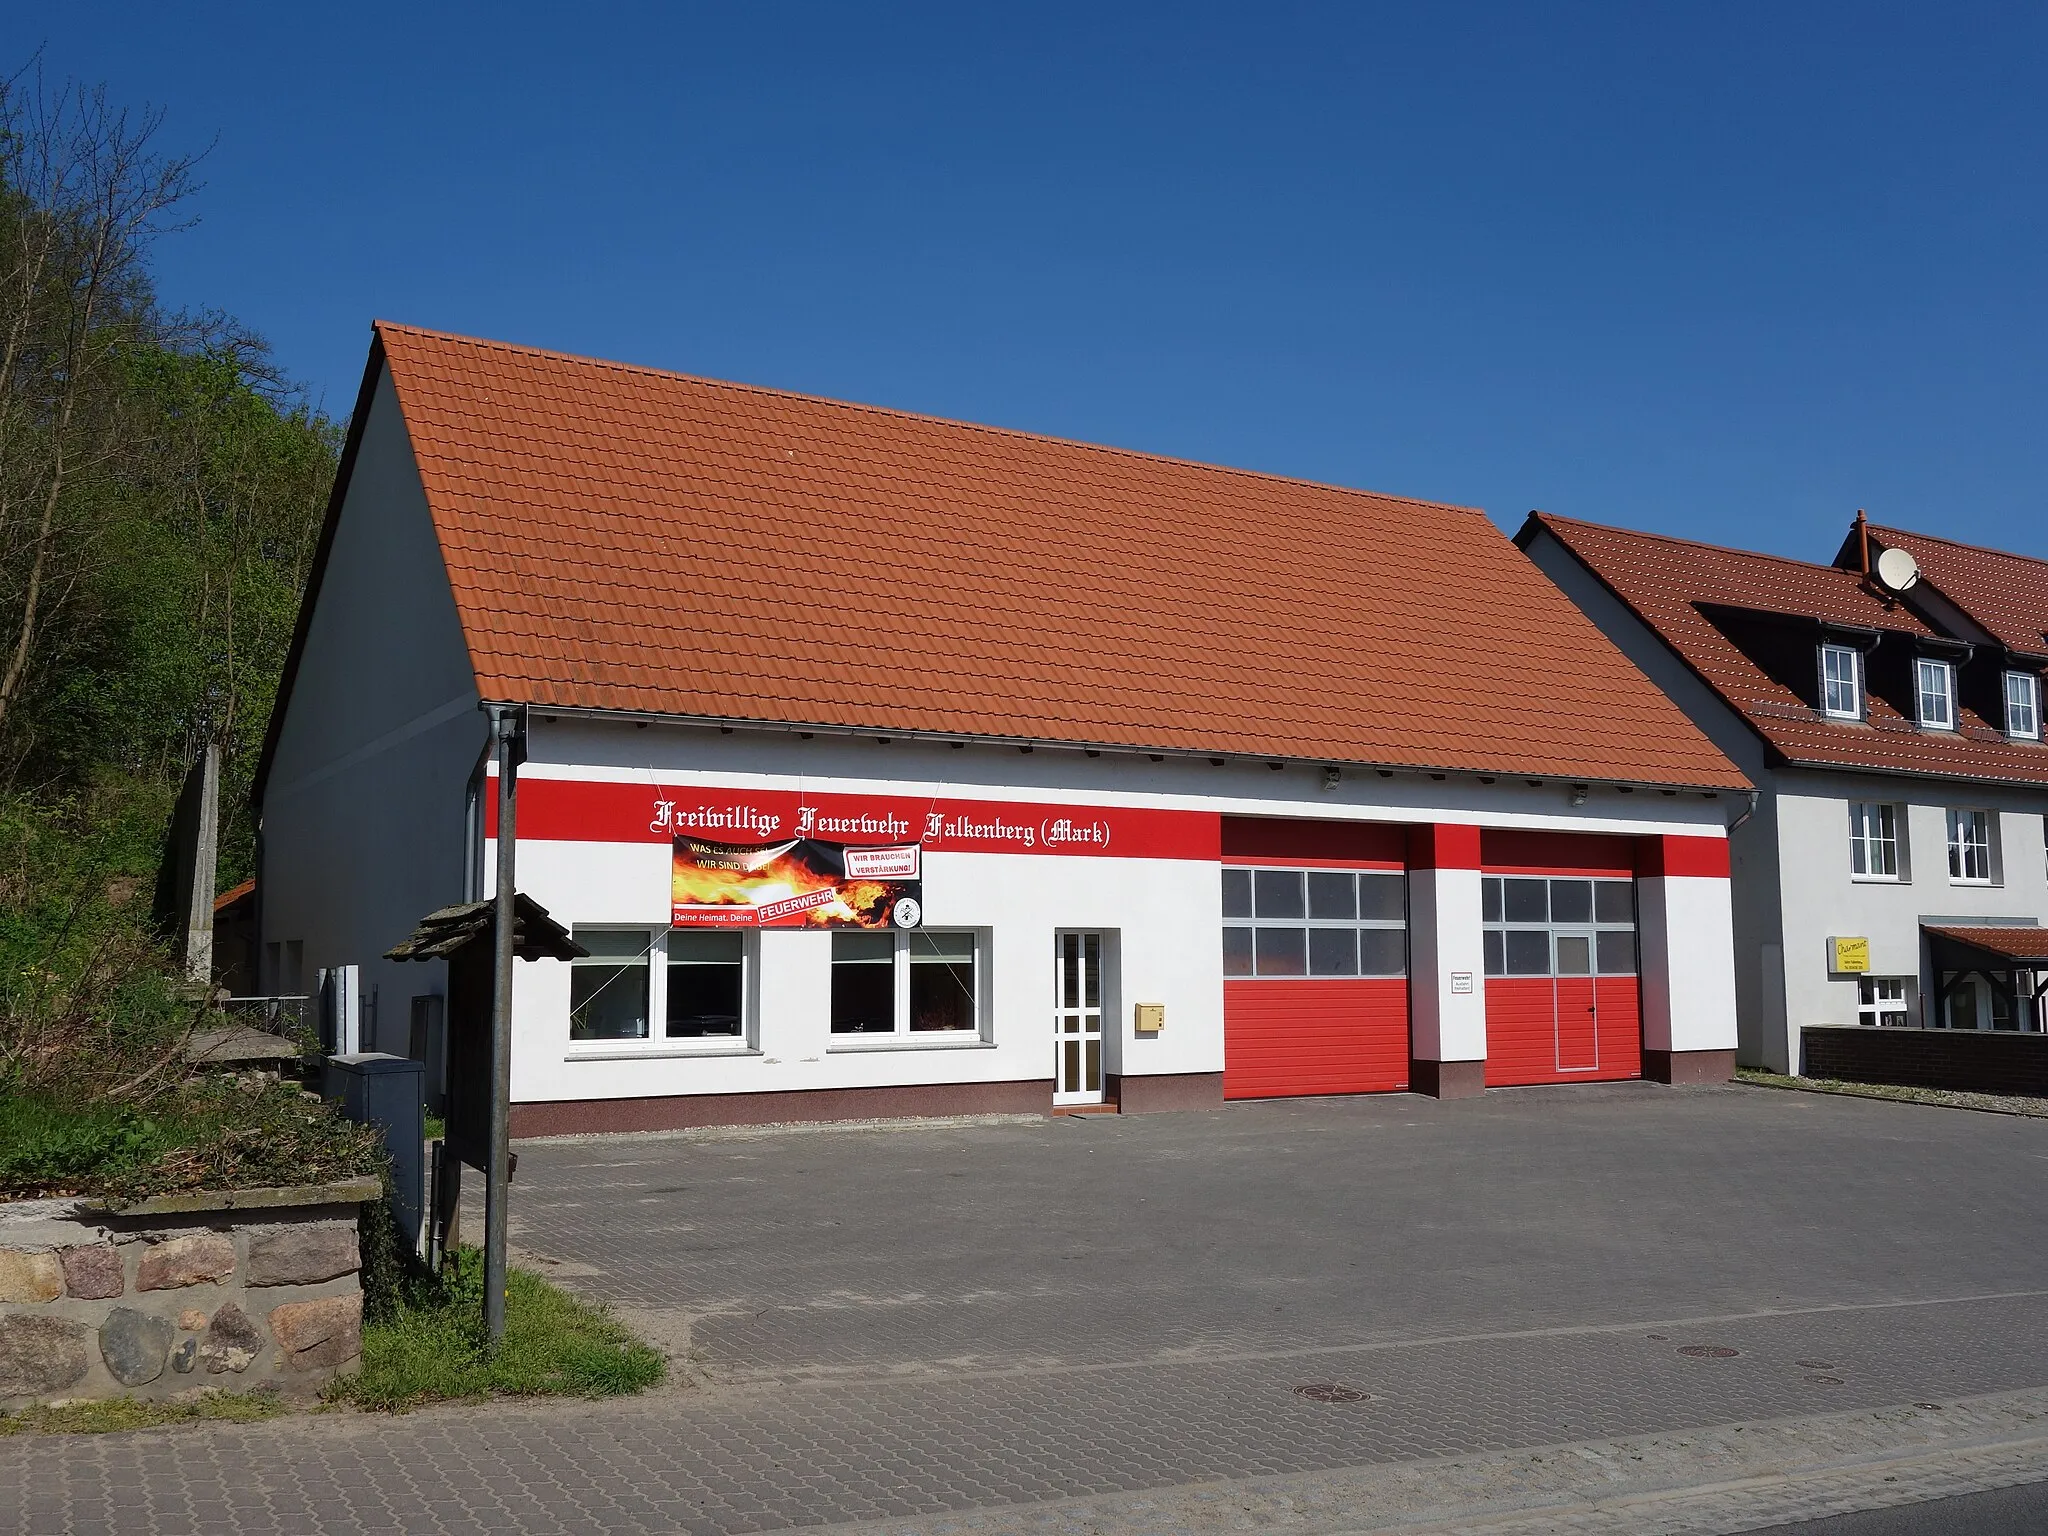 Photo showing: Firestation in Falkenberg , Falkenberg (Mark) municipality, Märkisch-Oderland district, Brandenburg state, Germany